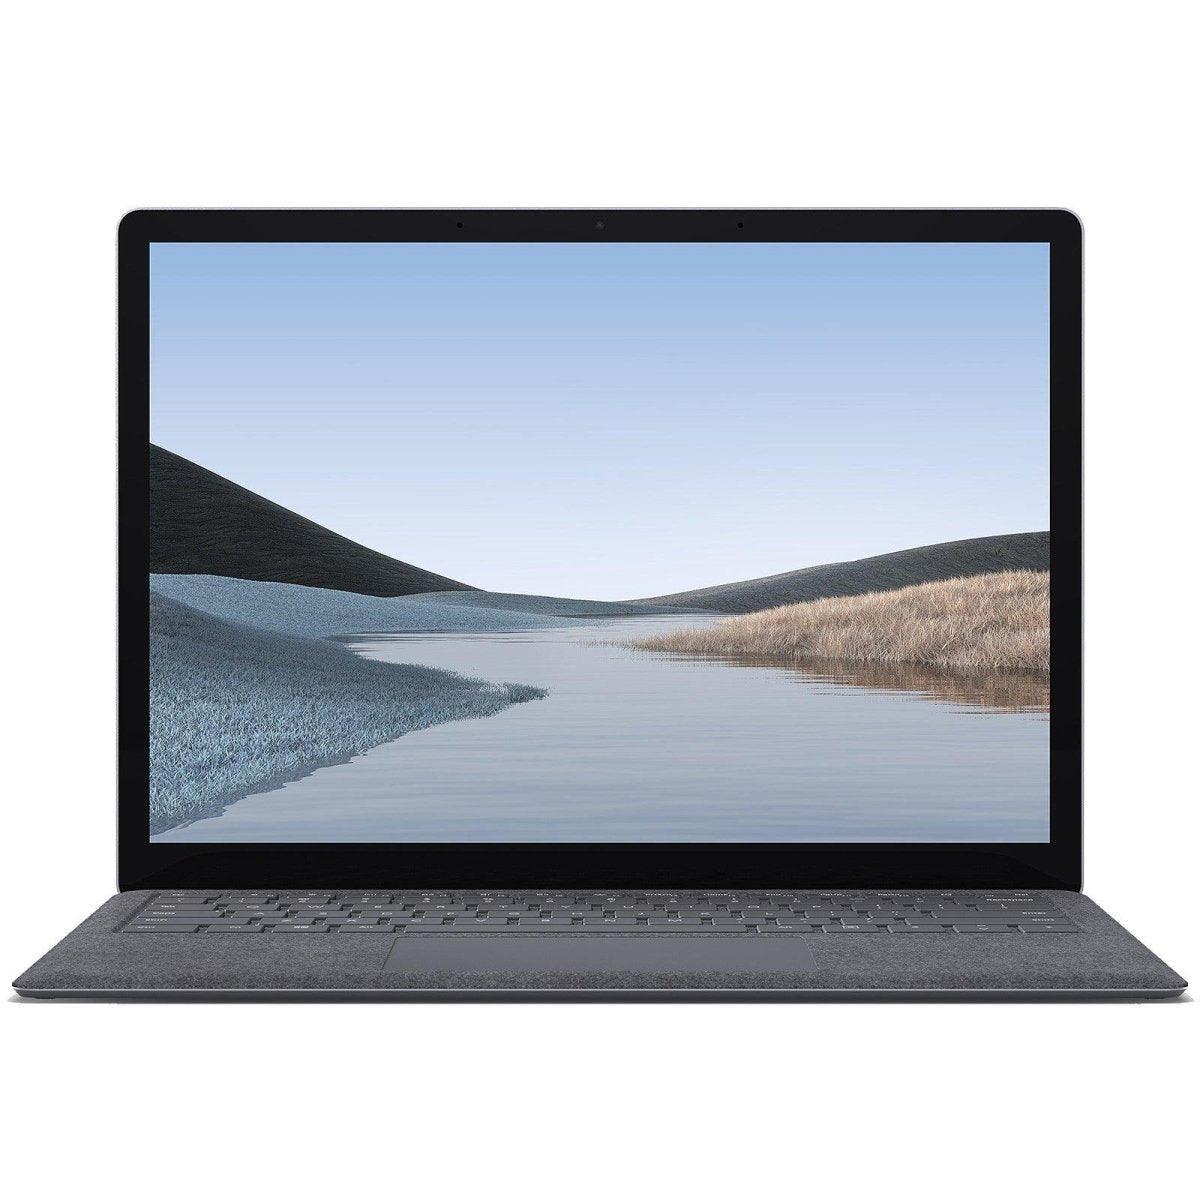 Microsoft Surface Laptop 3 Maroc Prix PC Portable pas cher - smartmarket.ma